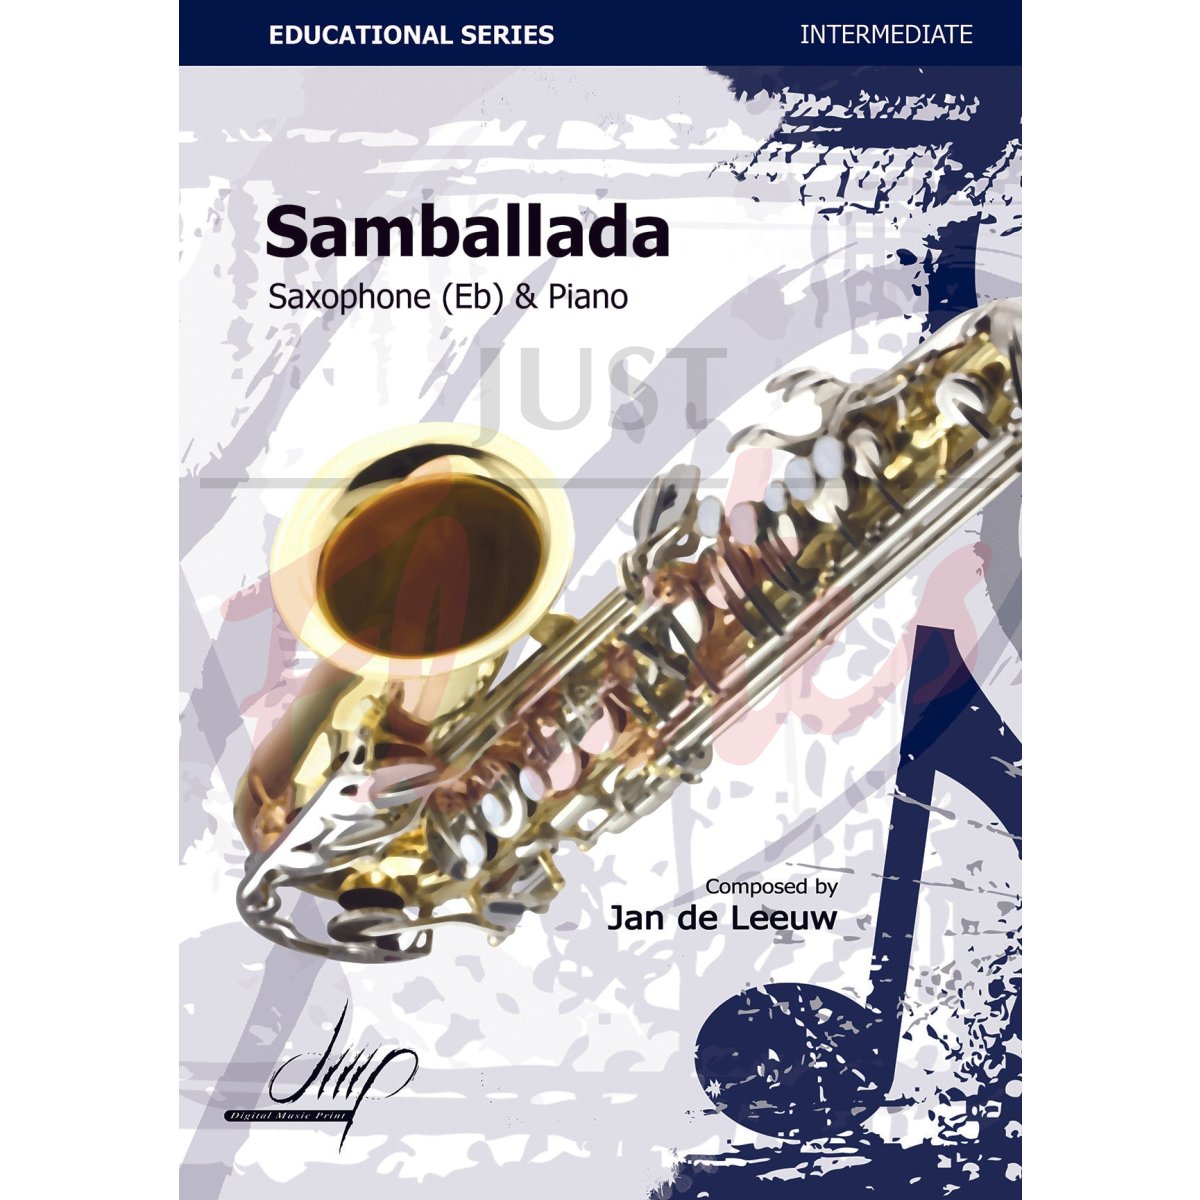 Samballada for Alto Saxophone and Piano